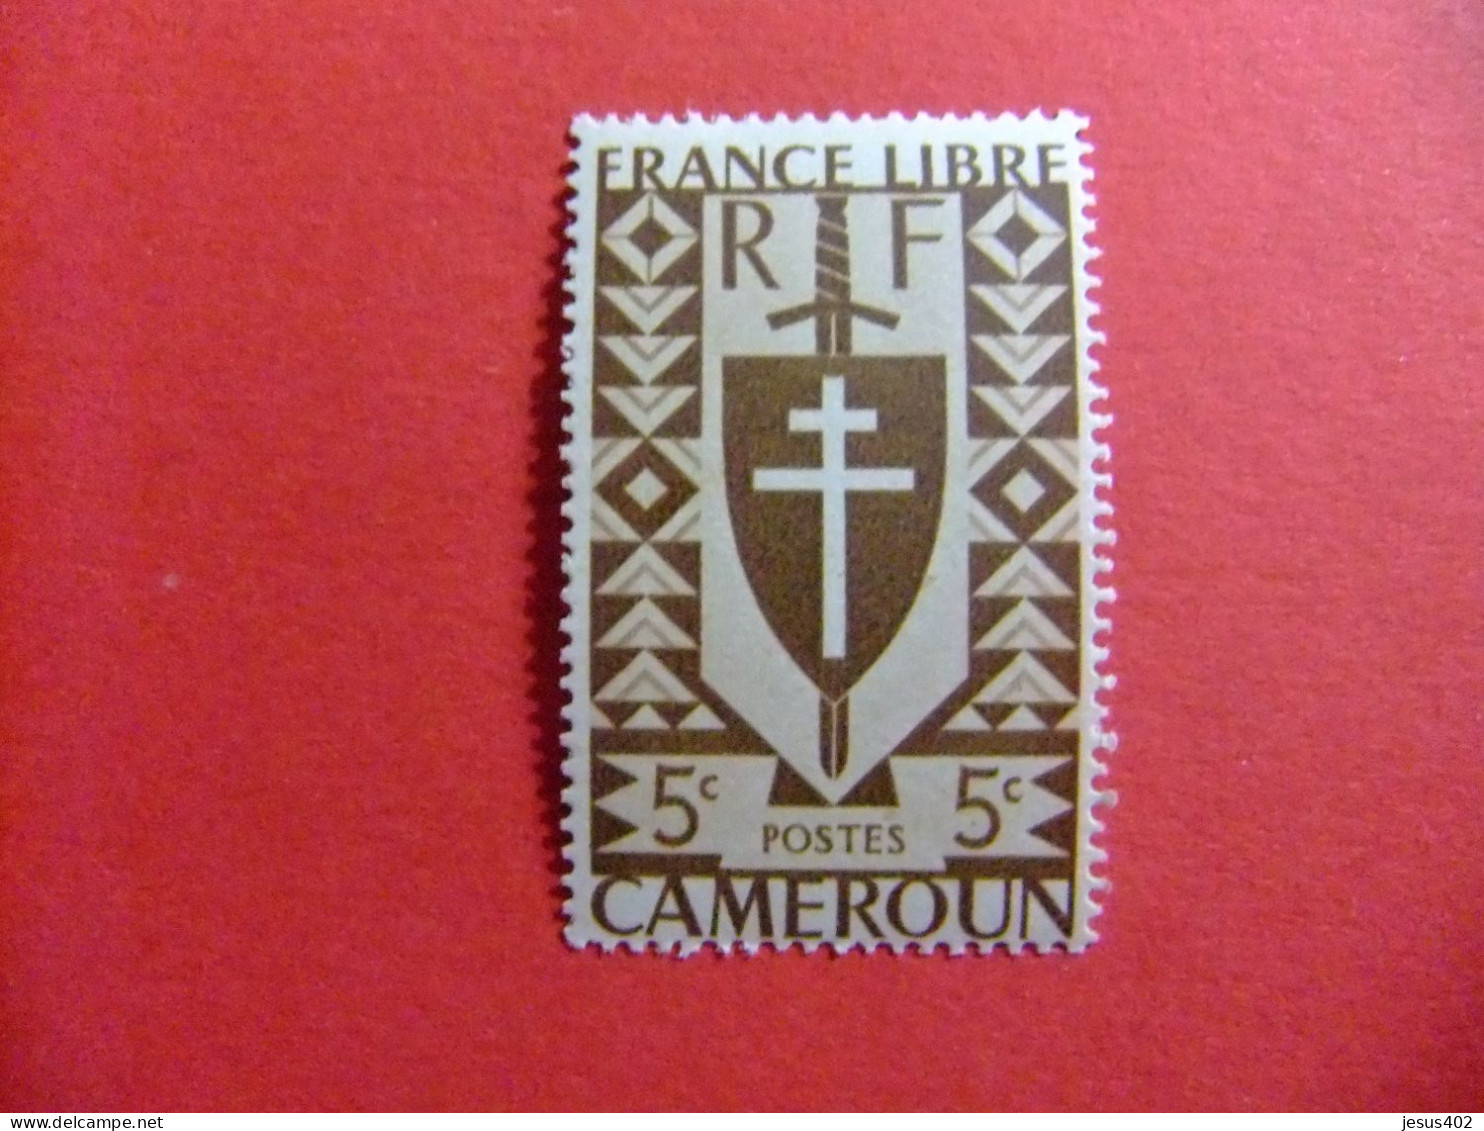 56 CAMEROUN CAMERÚN 1941 / FRANCIA LIBRE / YVERT 249 MNH - Ongebruikt